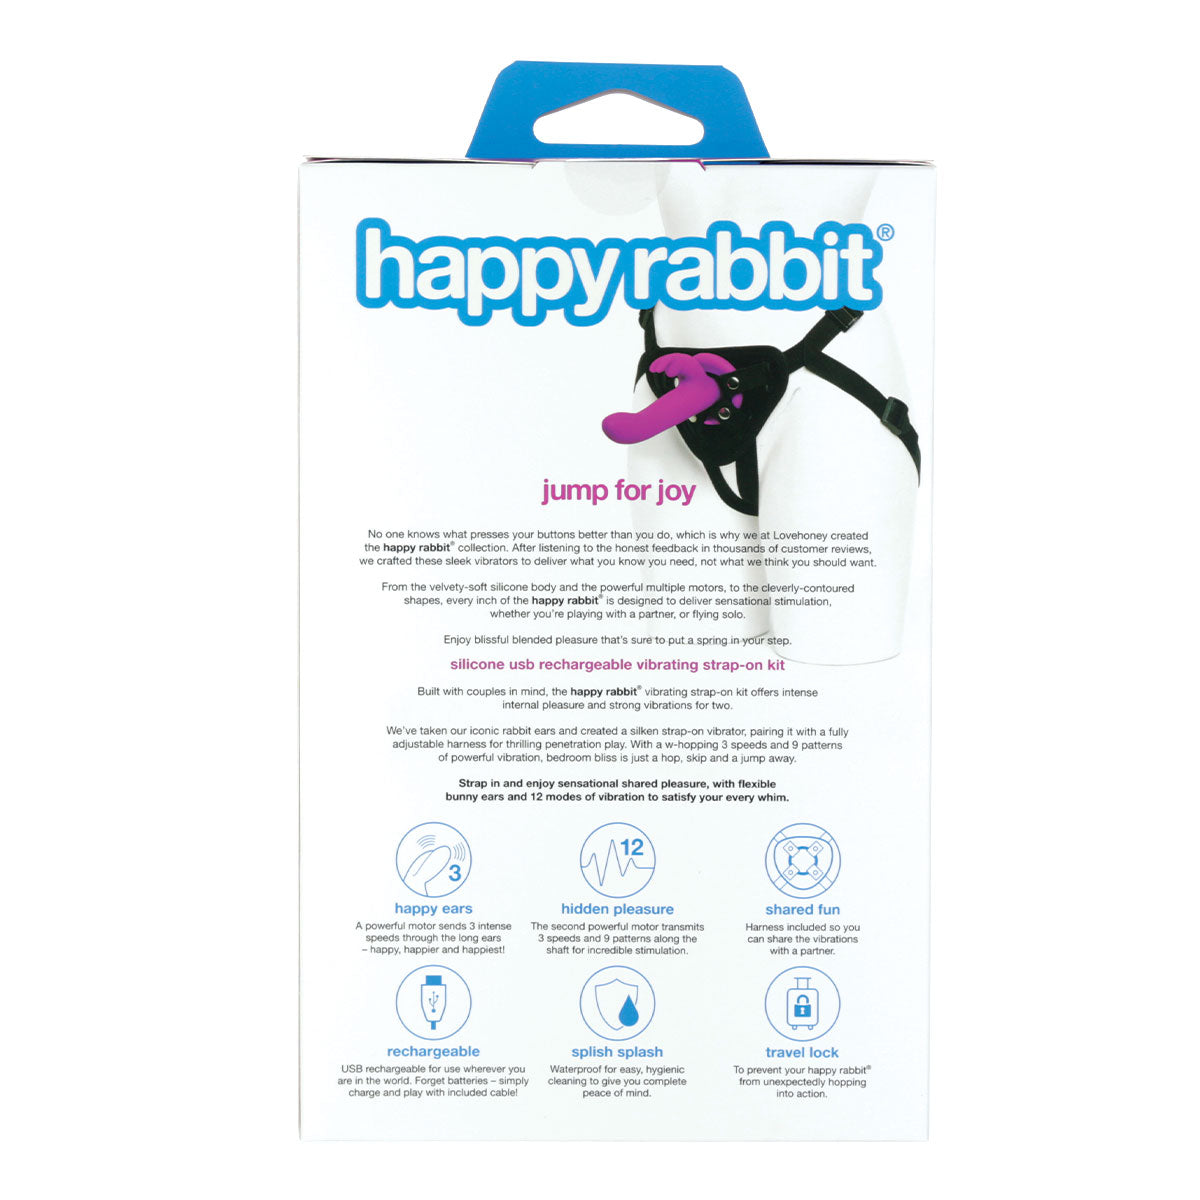 Happy Rabbit – Strap-On Kit - Purple